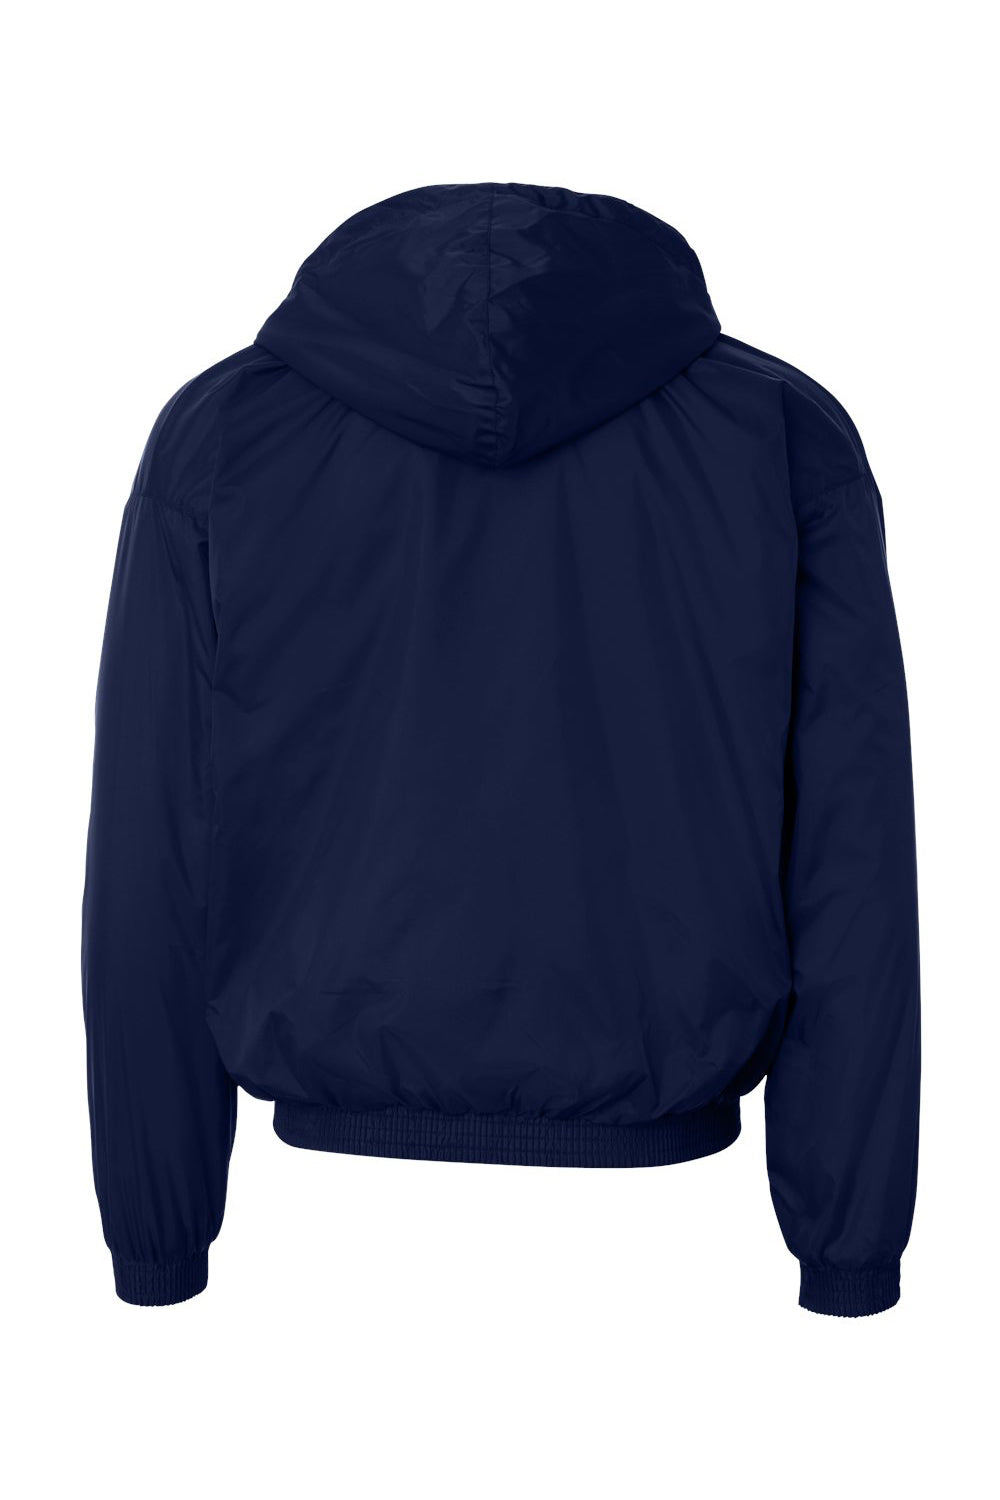 Augusta Sportswear 3280 Mens Water Resistant Full Zip Hooded Jacket Navy Blue Flat Back